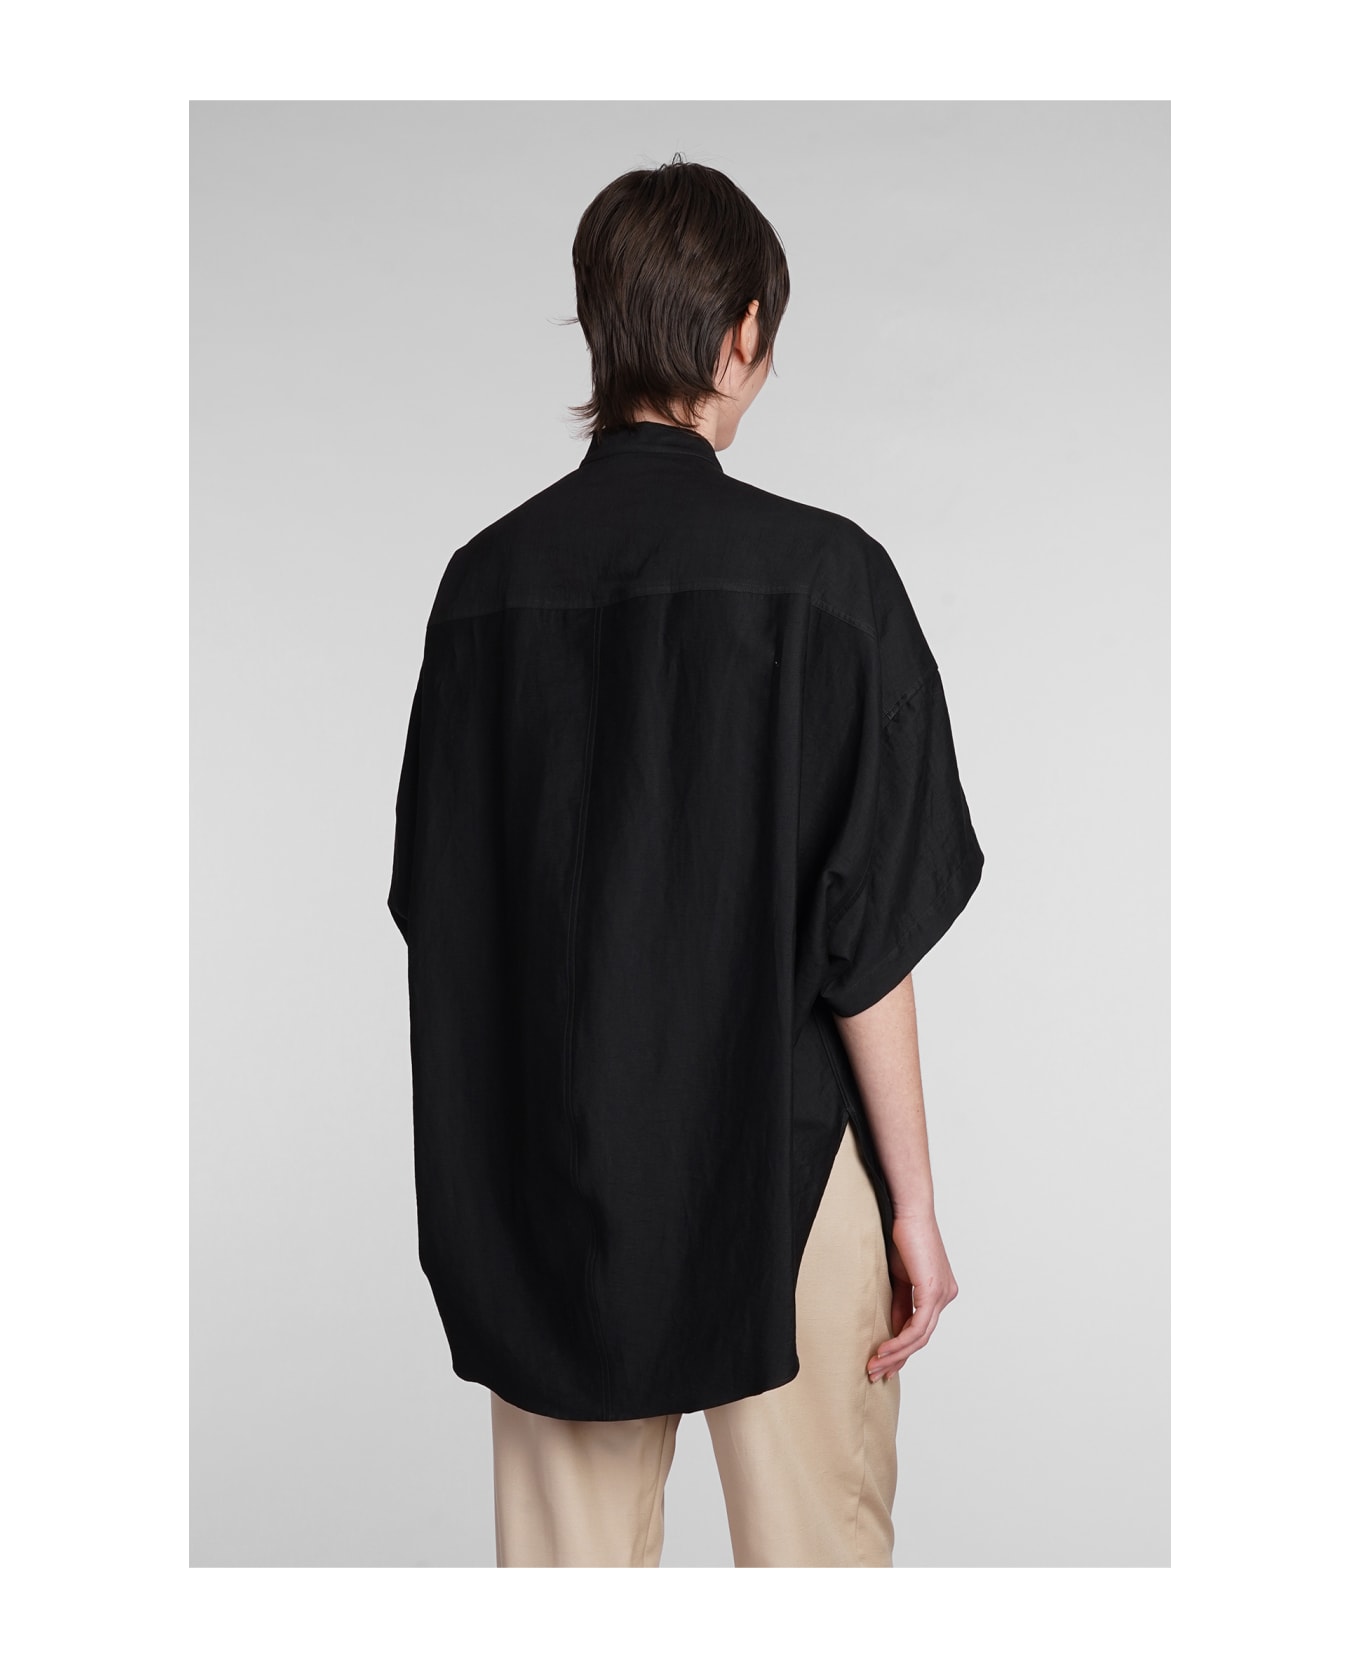 Stella McCartney Shirt In Black Linen - Black シャツ